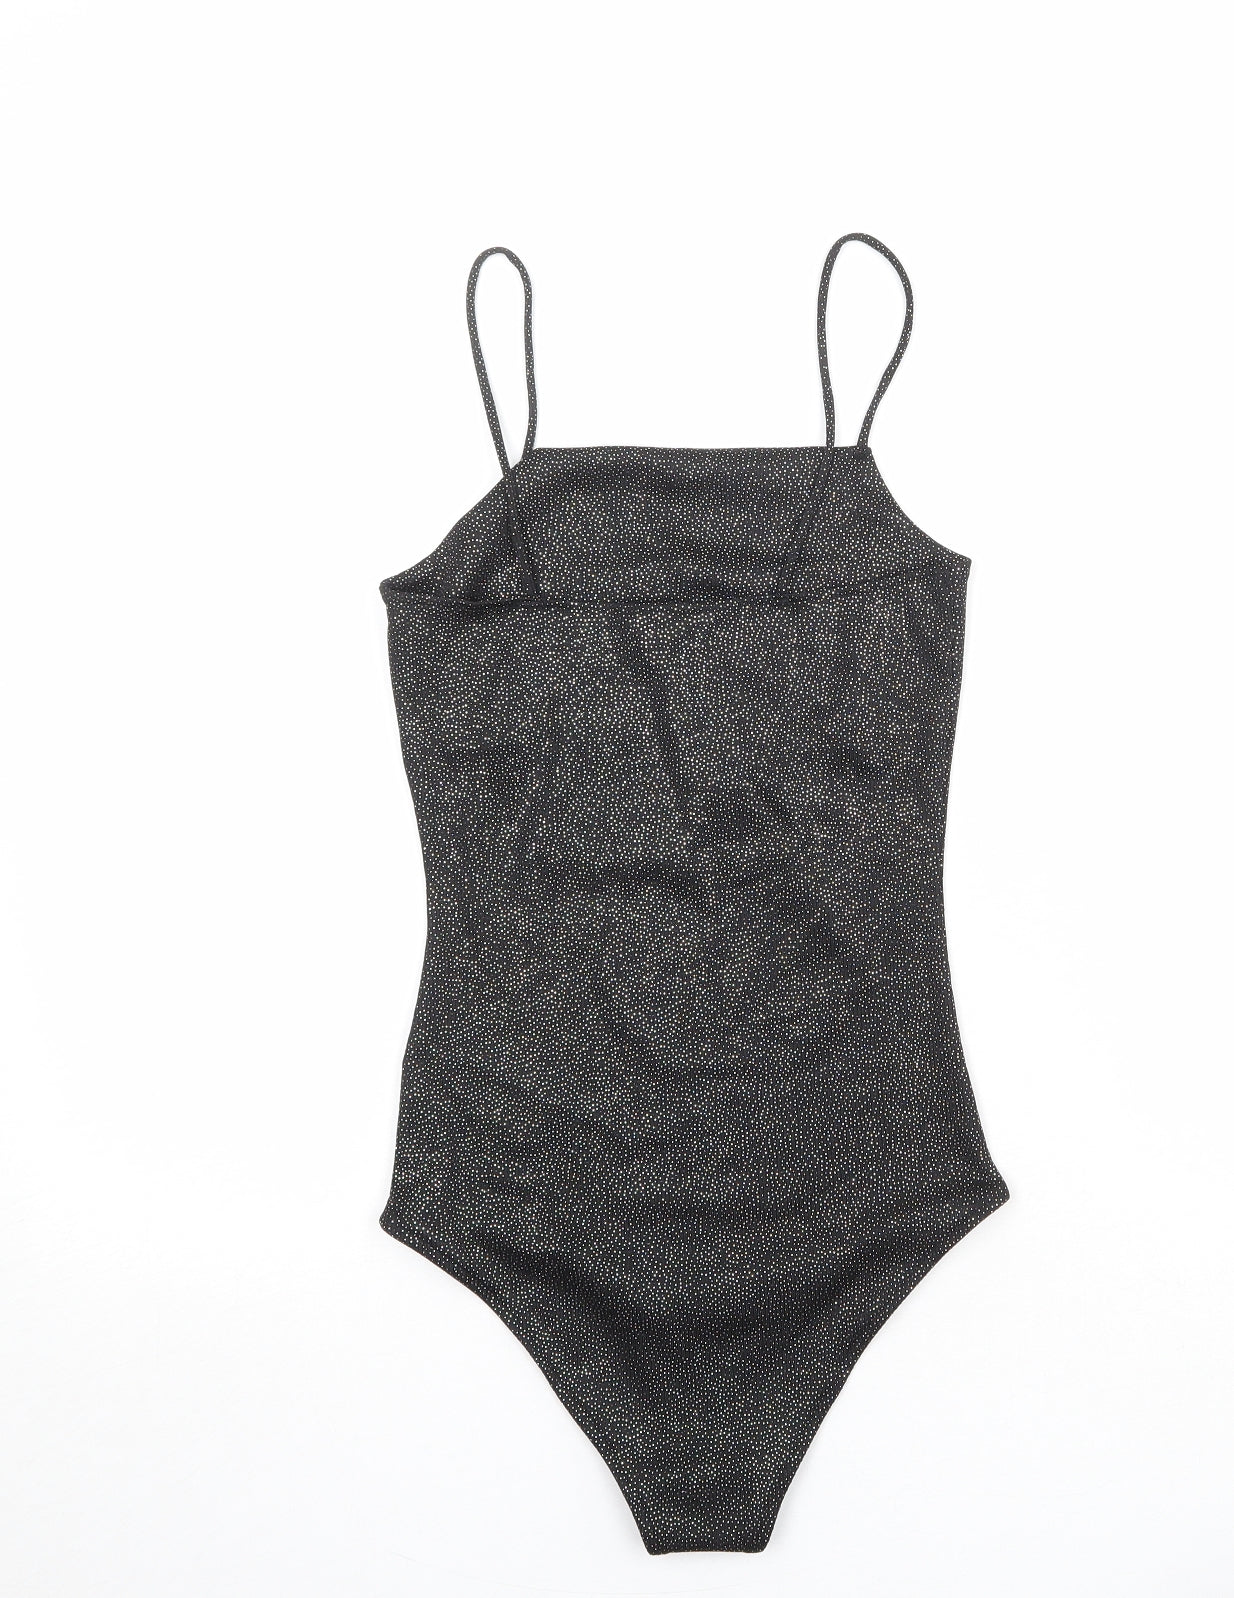 Topshop Womens Black Polka Dot Polyester Bodysuit One-Piece Size 8 Snap